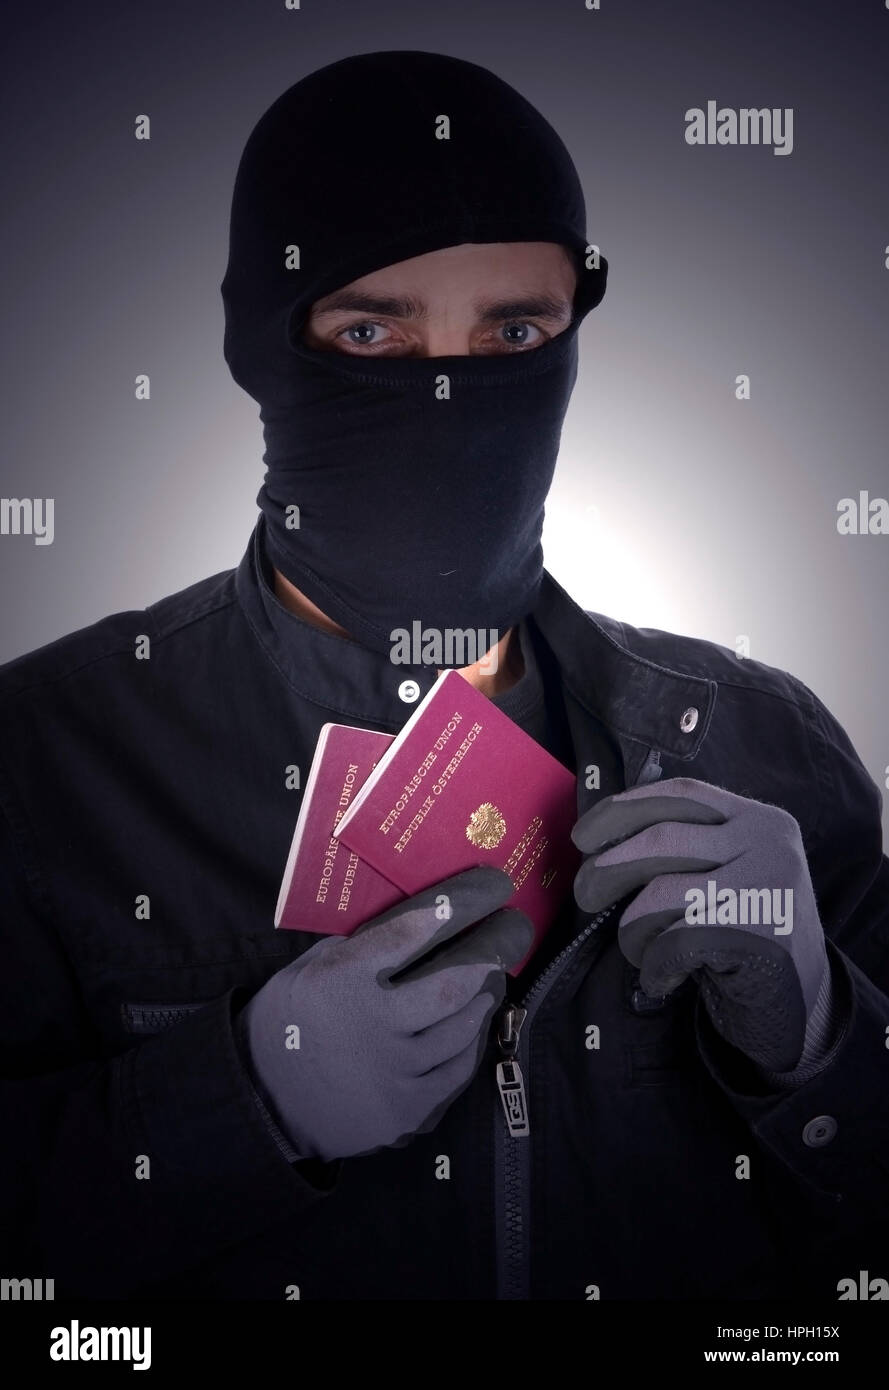 Modello rilasciato , Symbolbild Illegaler Einwanderer, Mann mit Gesichtsmaske und Reisepass - simbolico per immigrati illegali Foto Stock